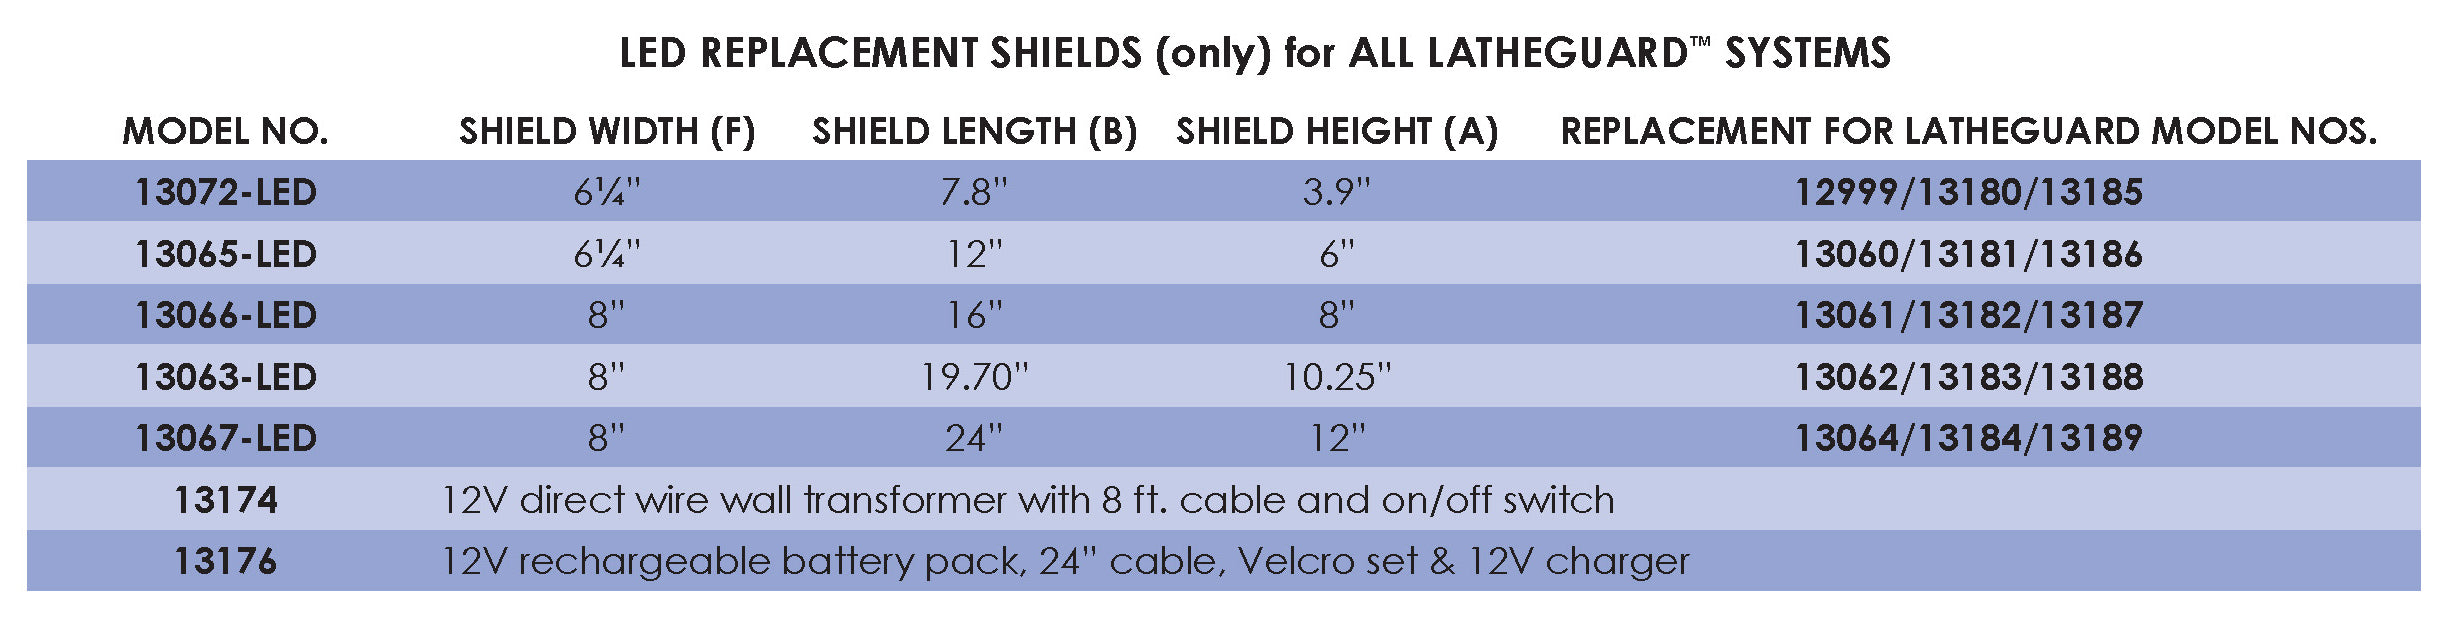 LED Replacement Shield for Mini Latheguard